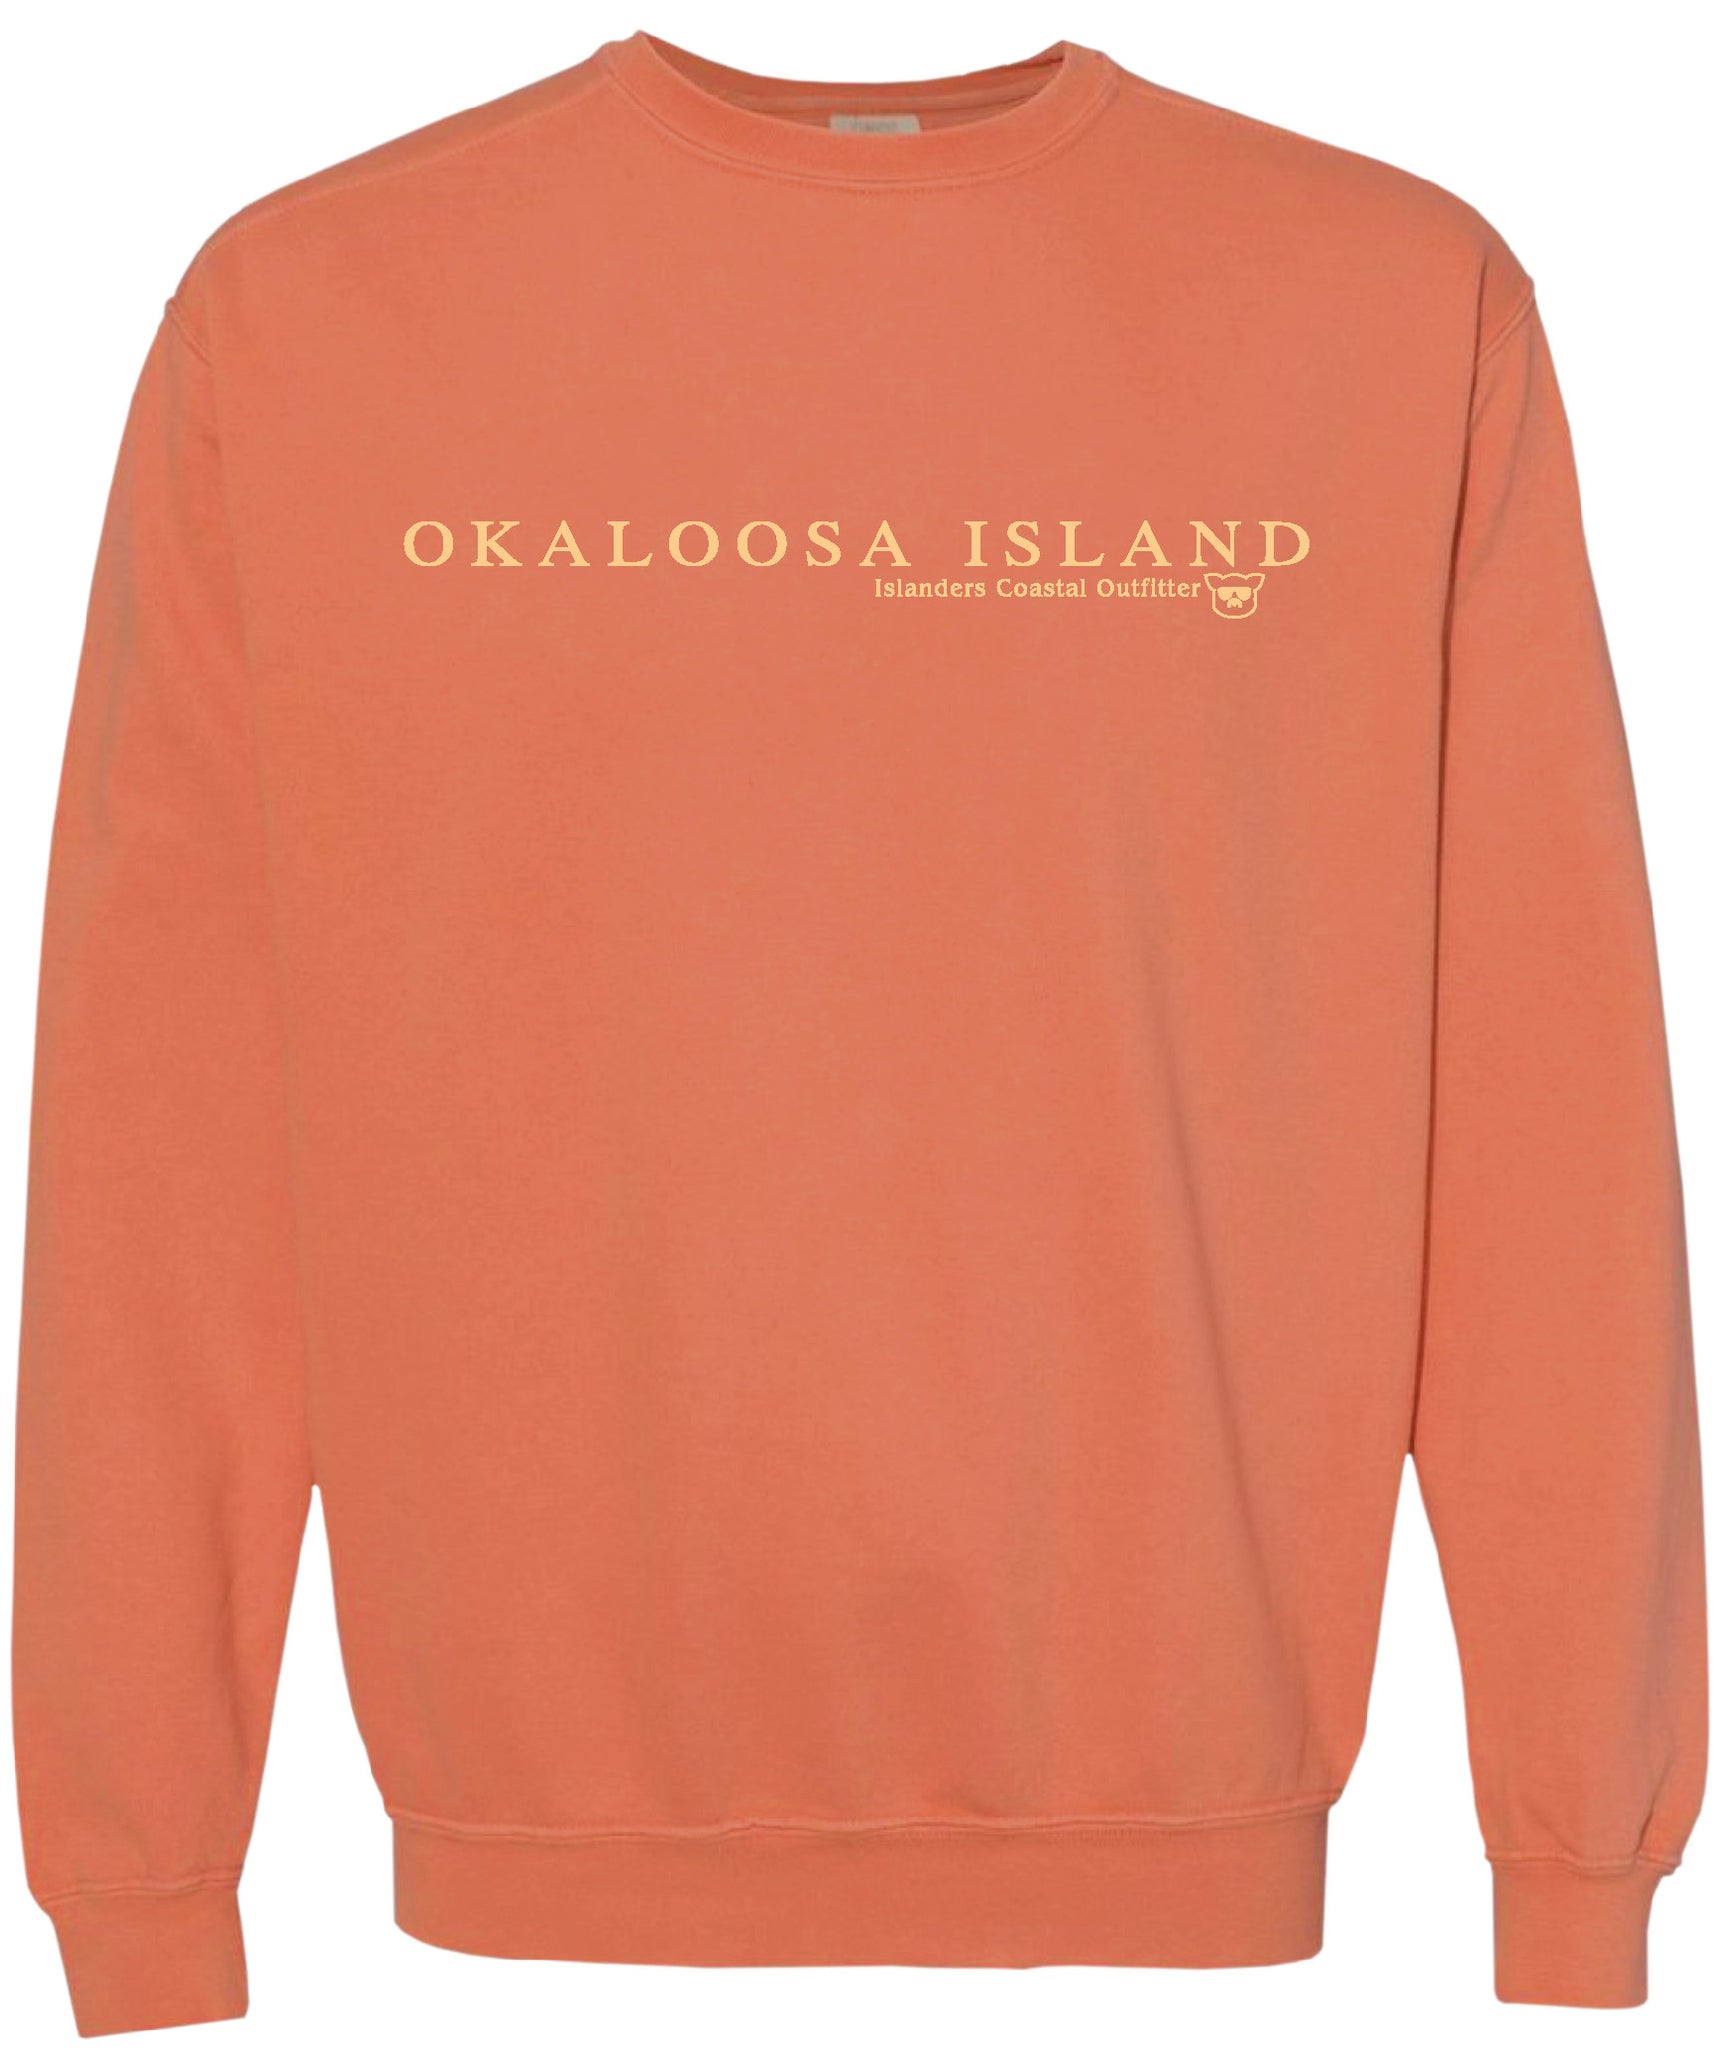 Islanders Simple Okaloosa Island Comfort Colors Sweatshirt - Terracotta/Ink